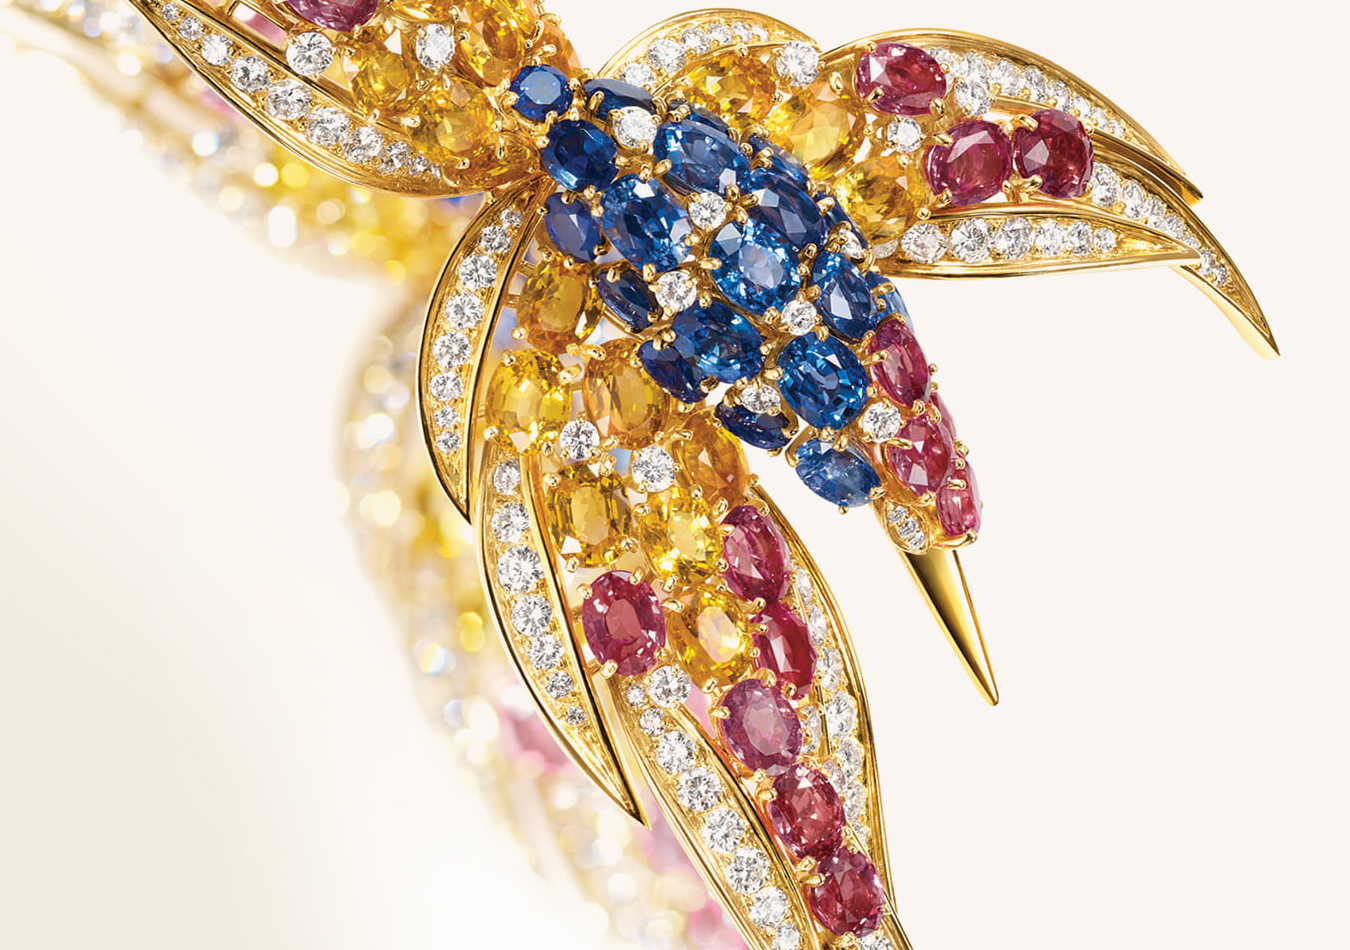 Luxury jewelry and eyewear - Fred Paris